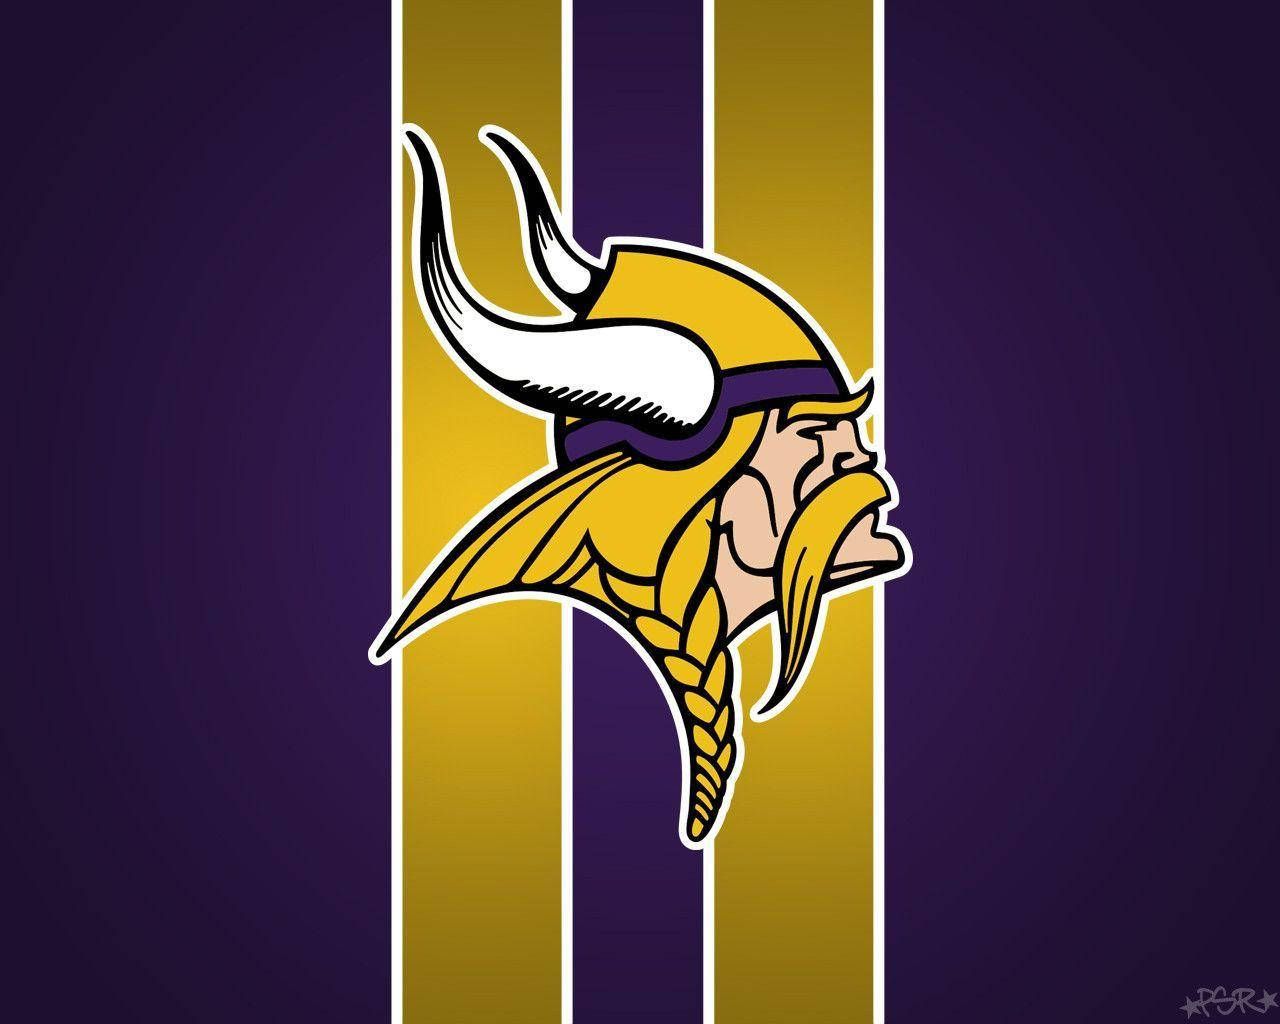 Top 999+ Minnesota Vikings Wallpaper Full HD, 4K✅Free to Use